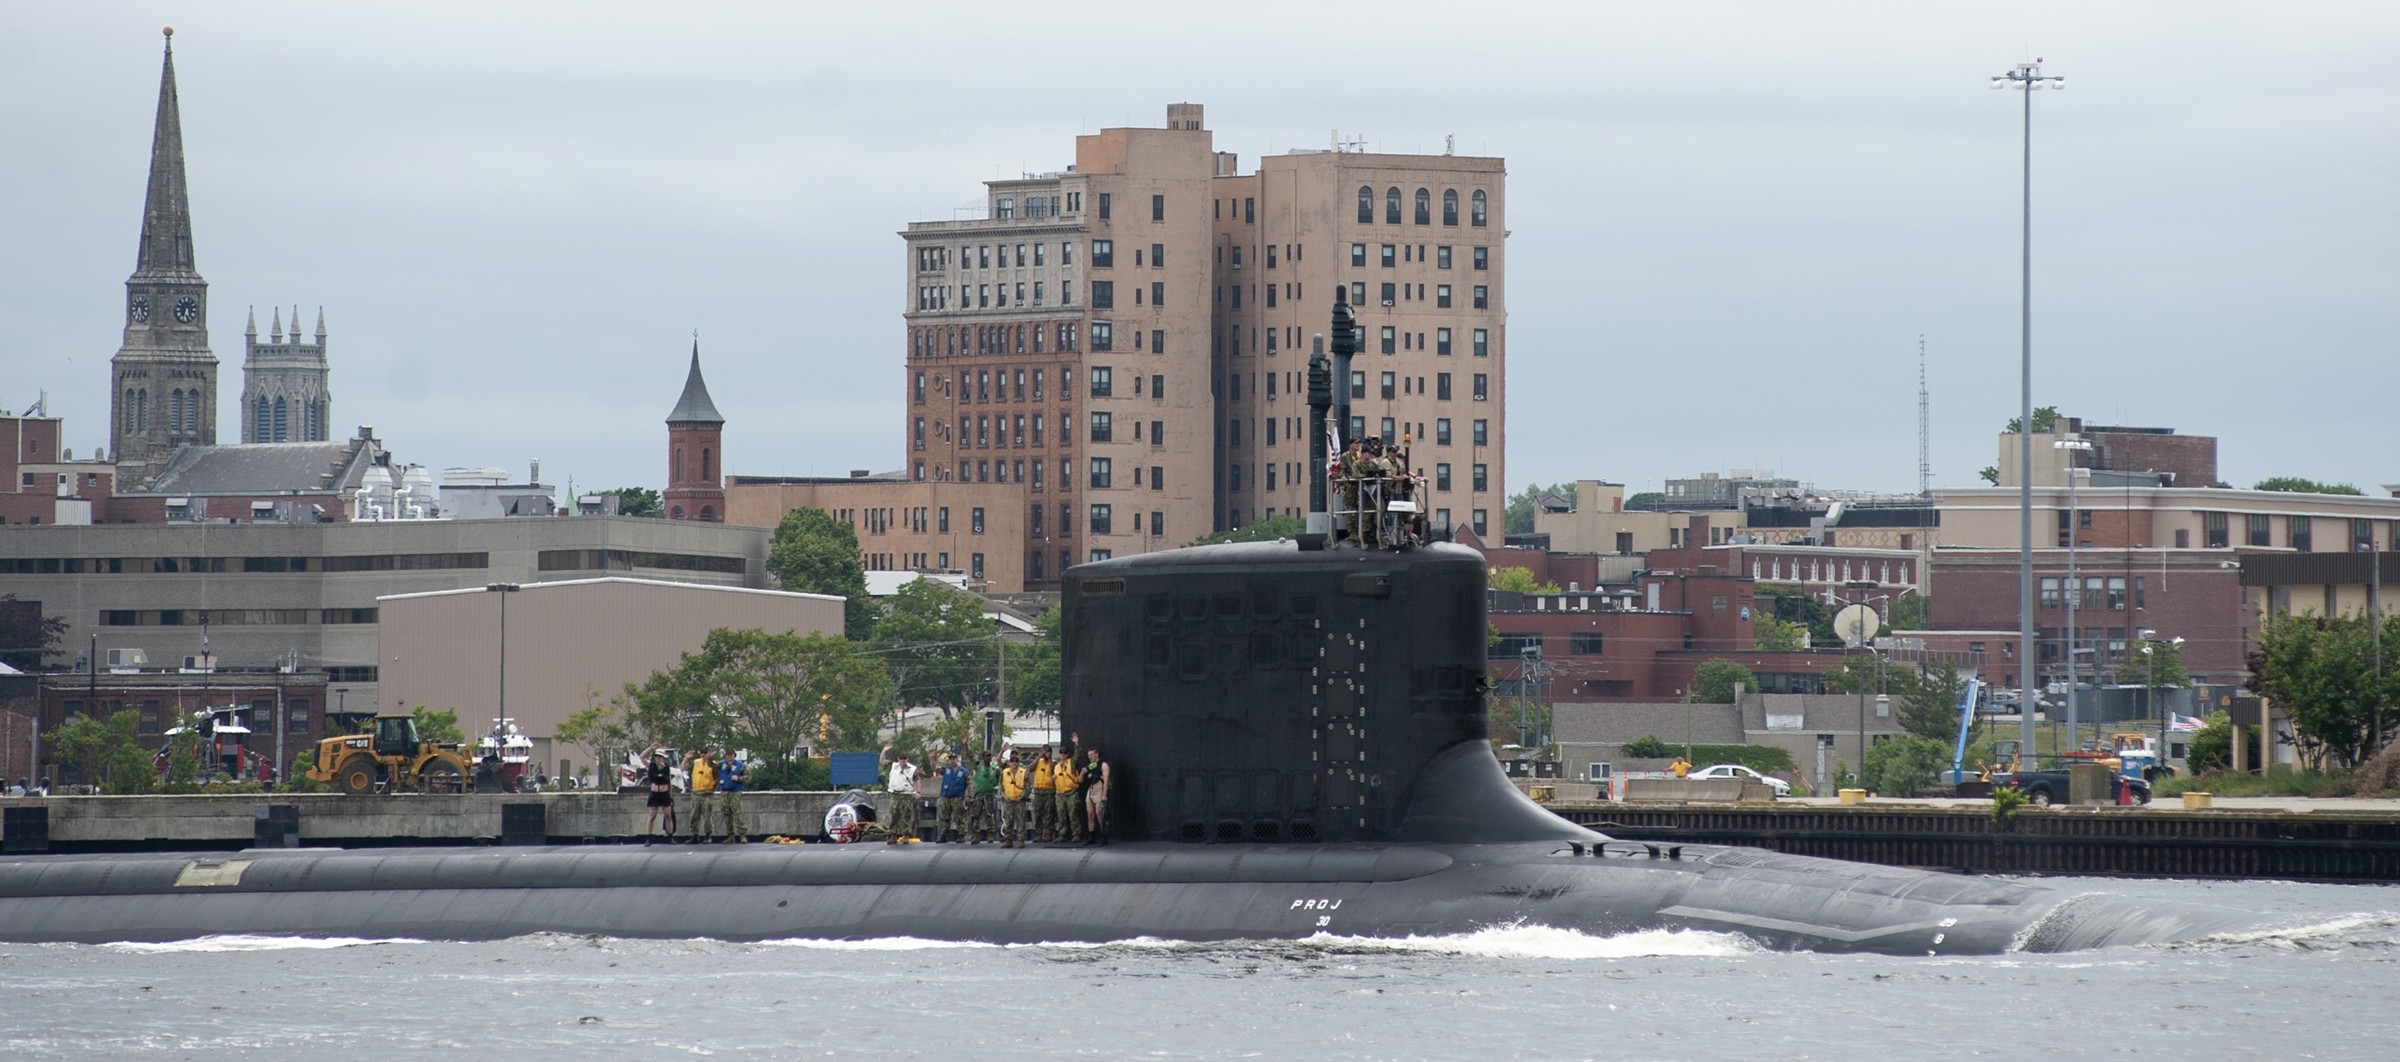 ssn-781 uss california virginia class attack submarine us navy 38 subase new london groton connecticut